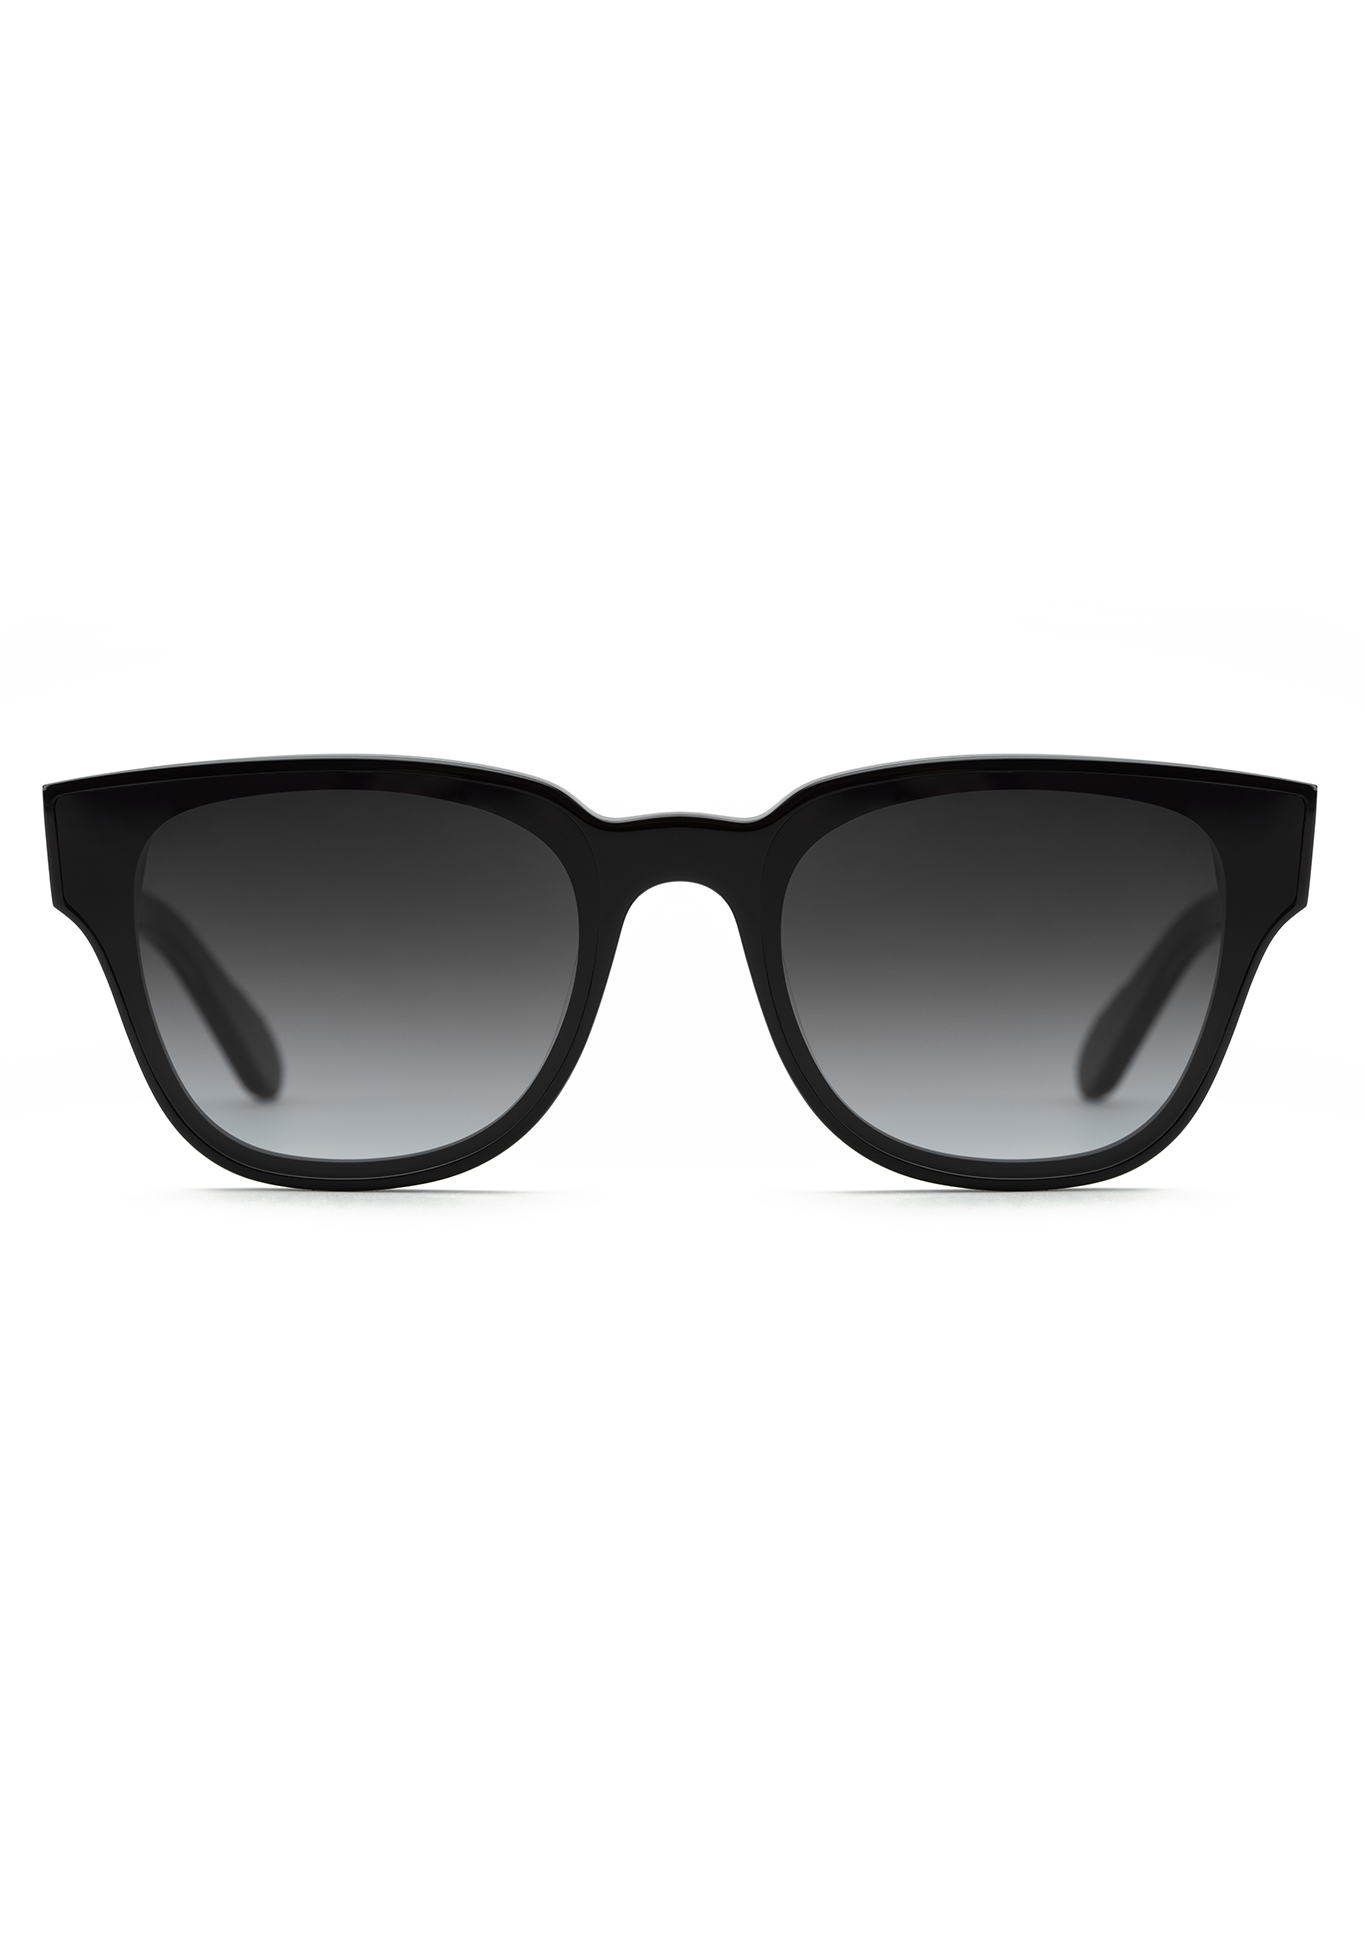 WEBSTER NYLON | Black + Shadow Handcrafted, Luxury Black Acetate KREWE Sunglasses